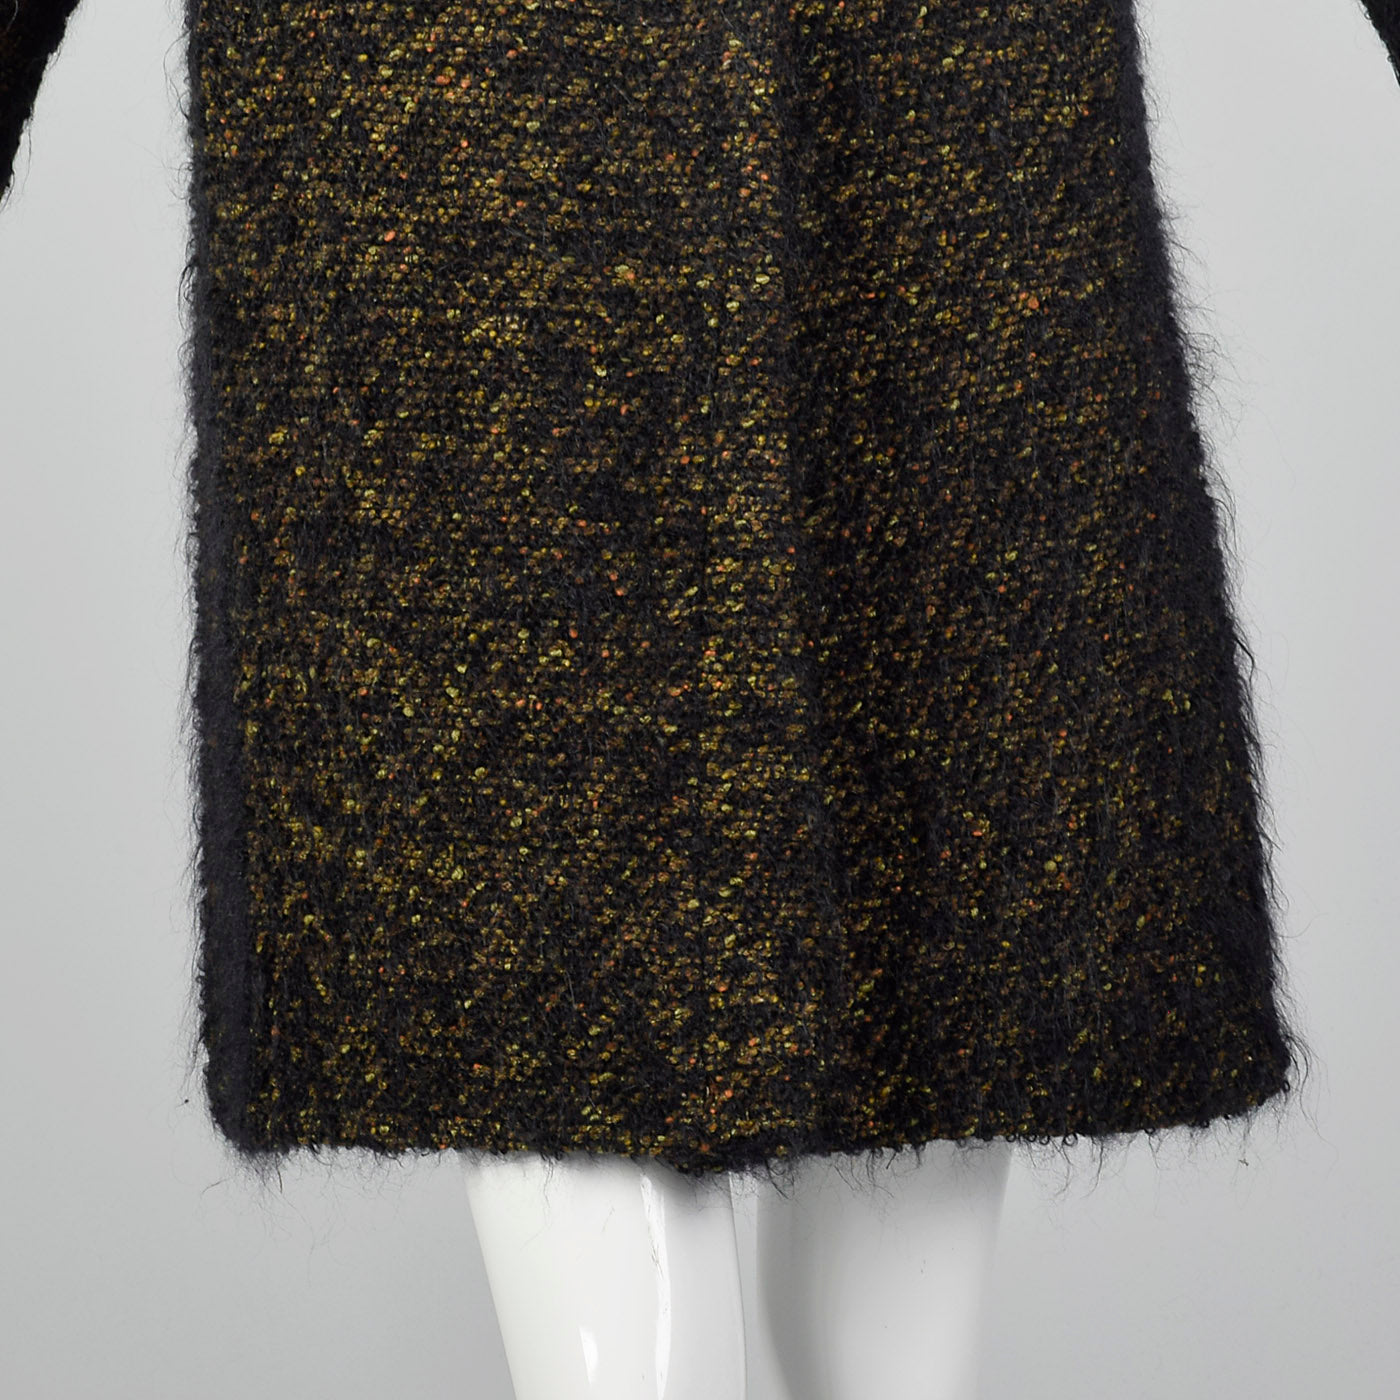 1960s Black Mohair Coat